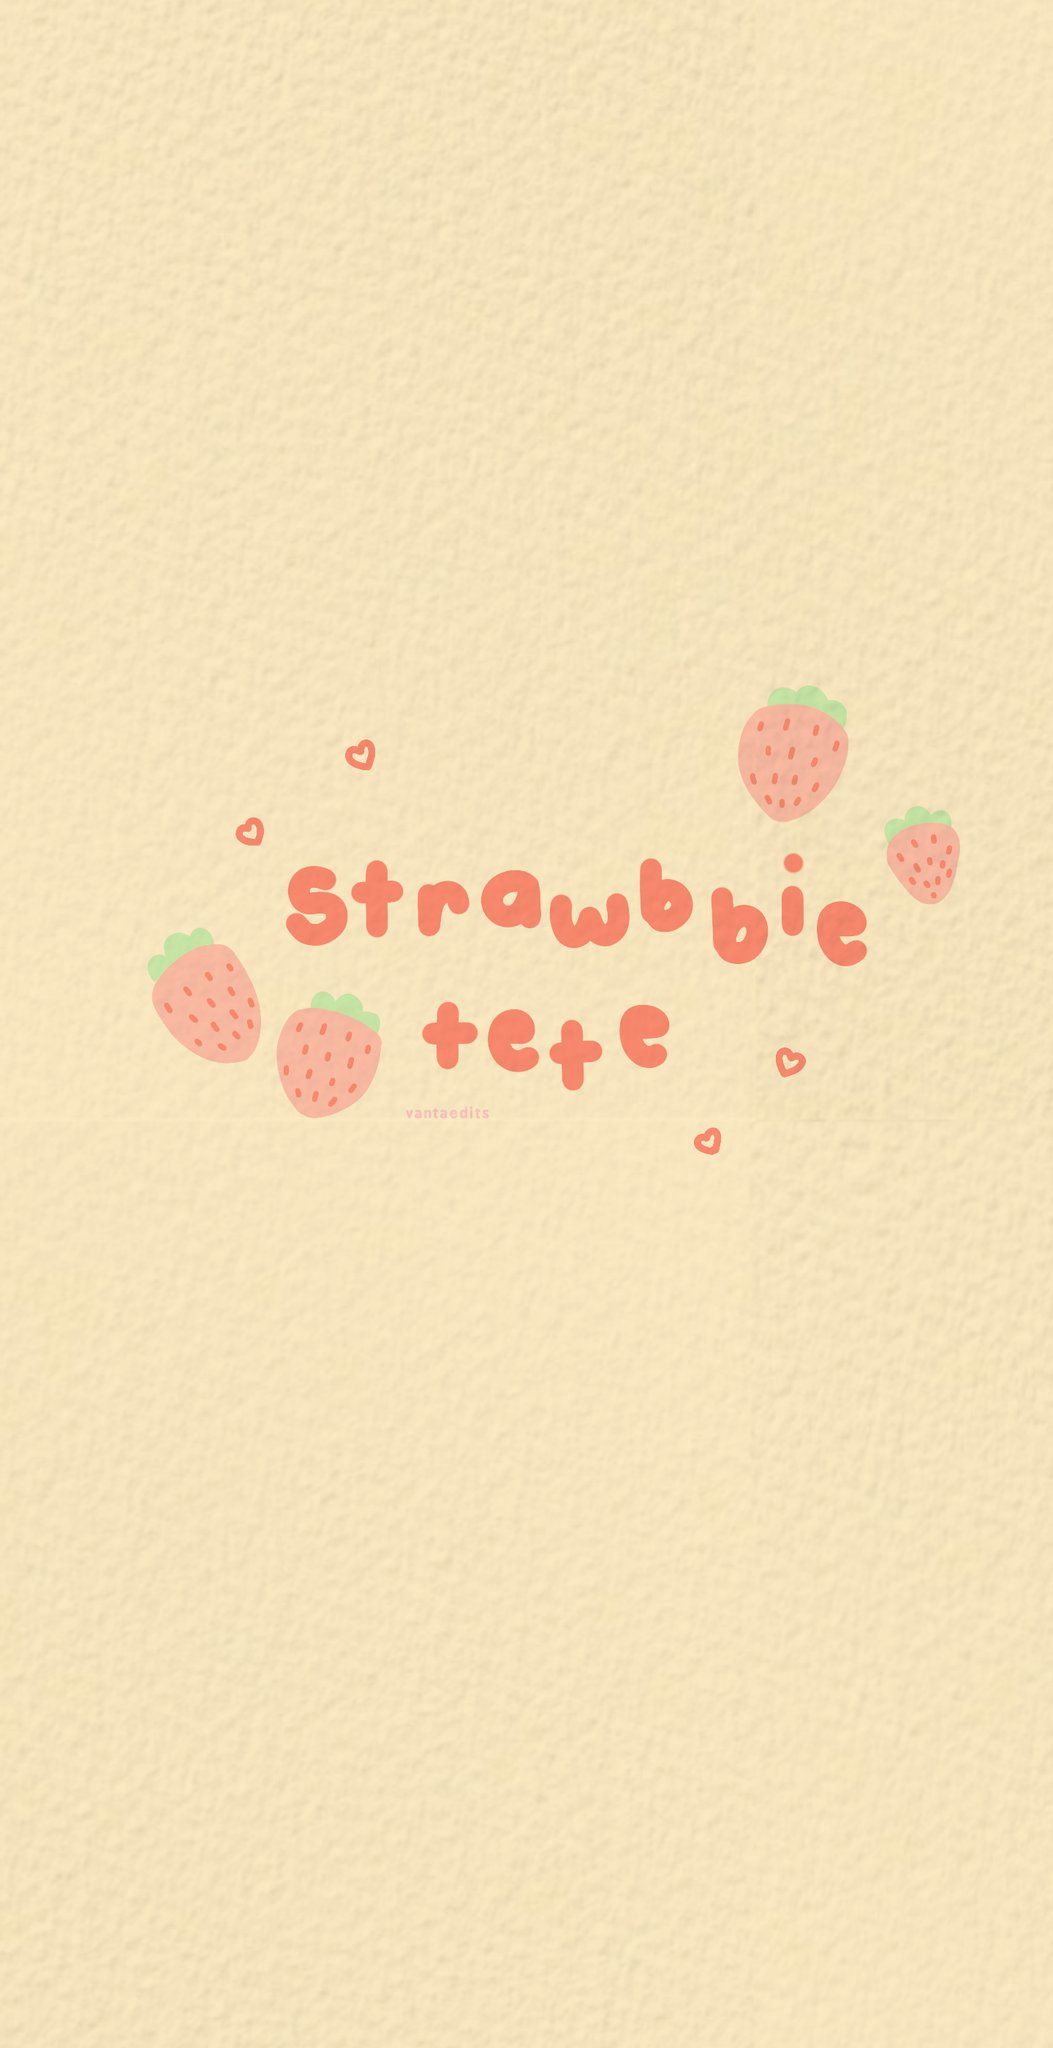 on X: strawbbie taehyung wallpaper !!